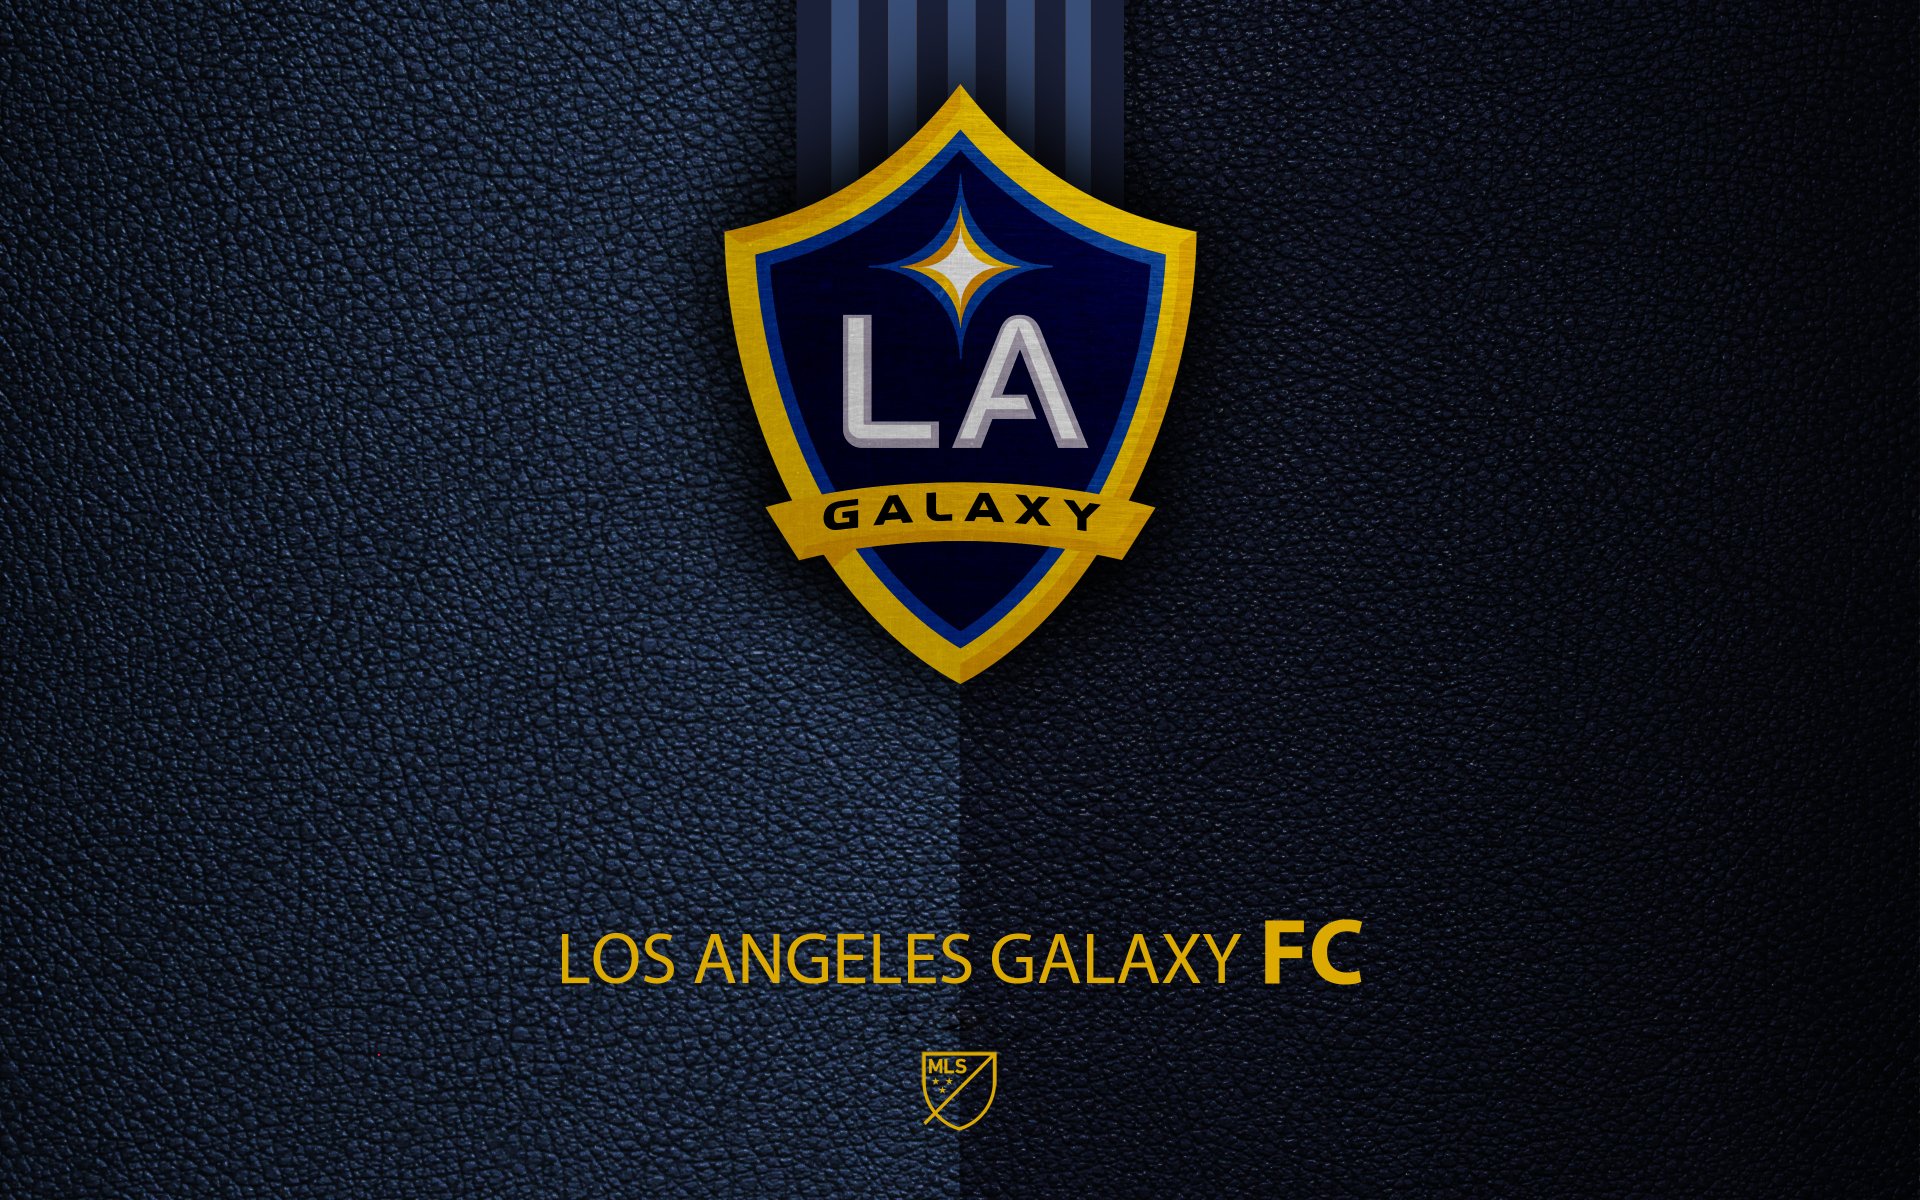 4K LA Galaxy Wallpaper and Background Image